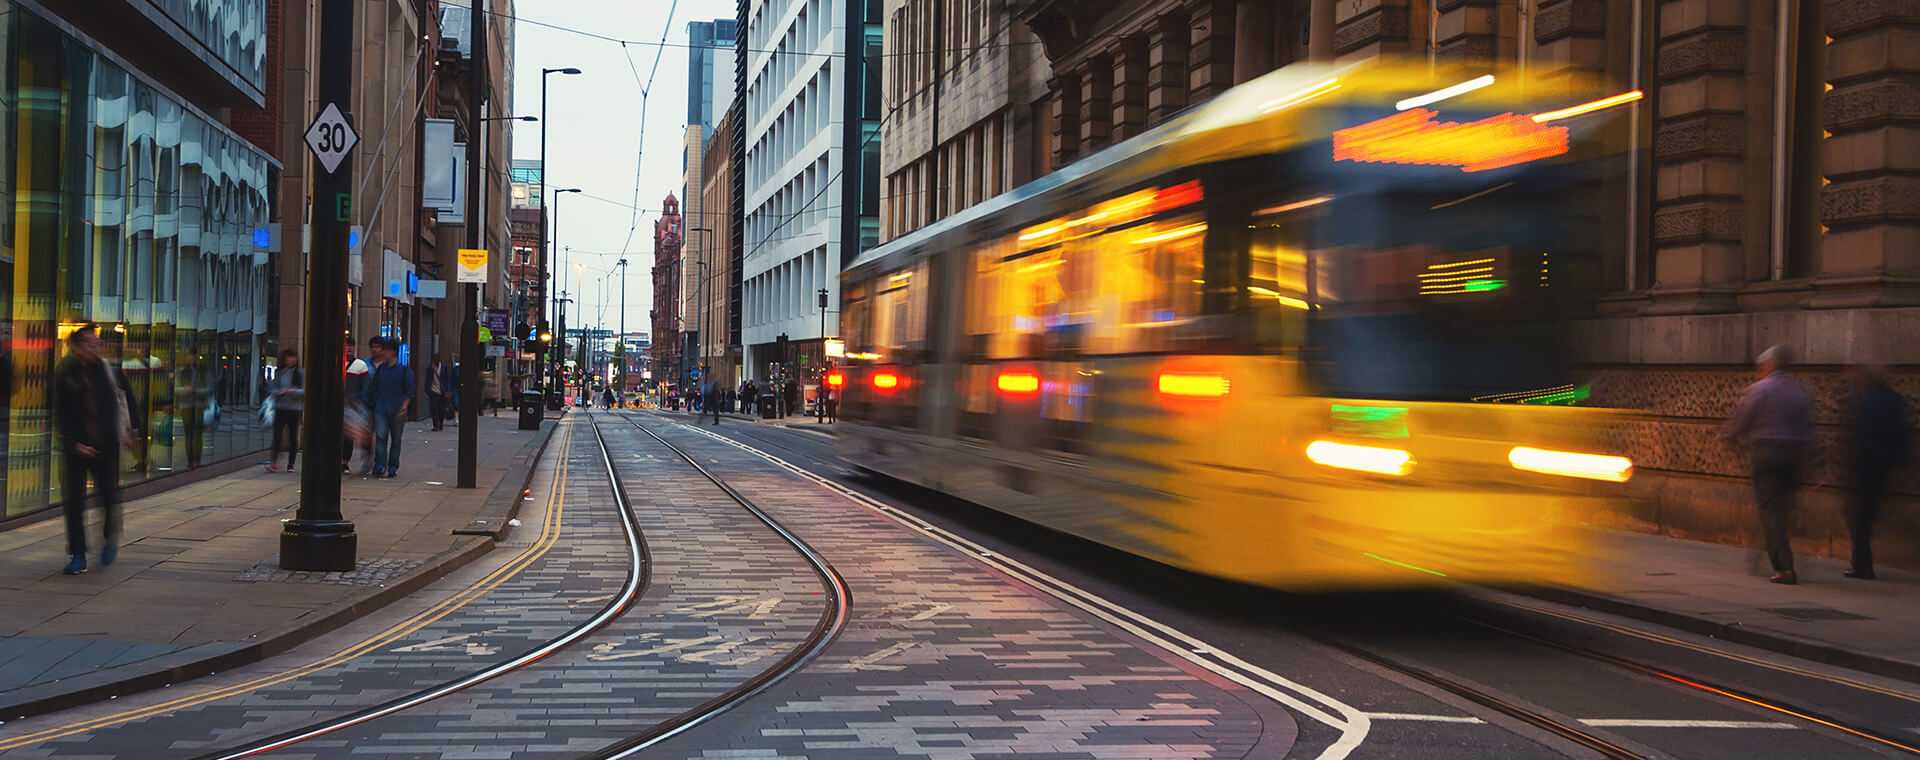 A blurred tram passing through a city